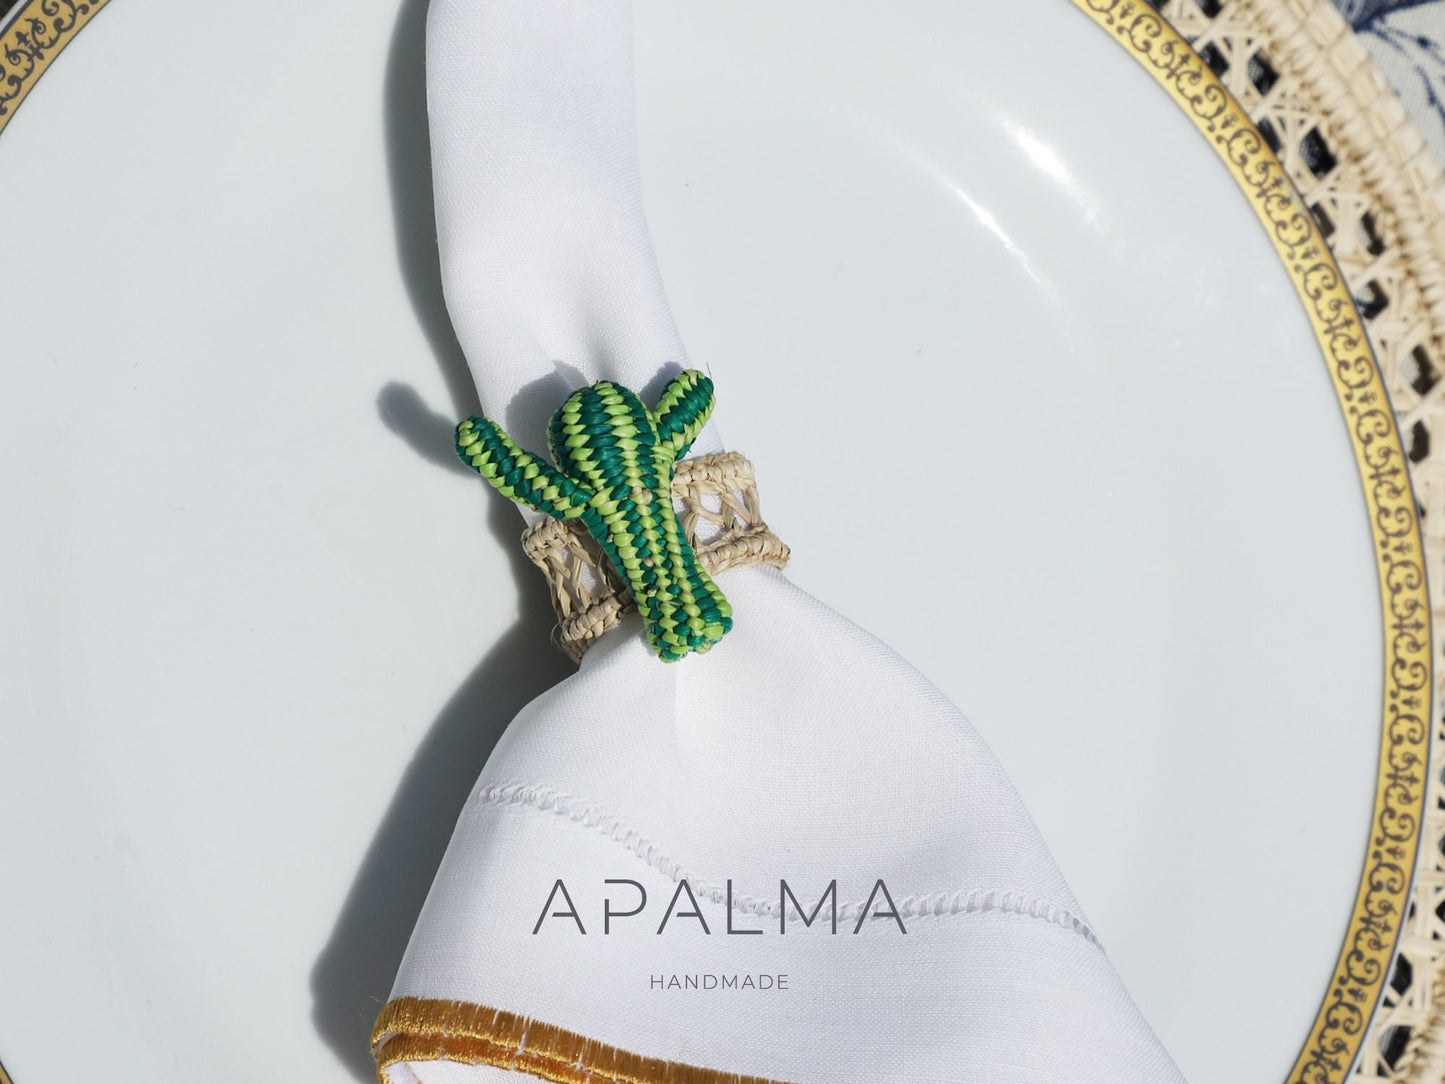 Arizona Cactus Napkin Ring - Made of Palm - Sold individually or by Set